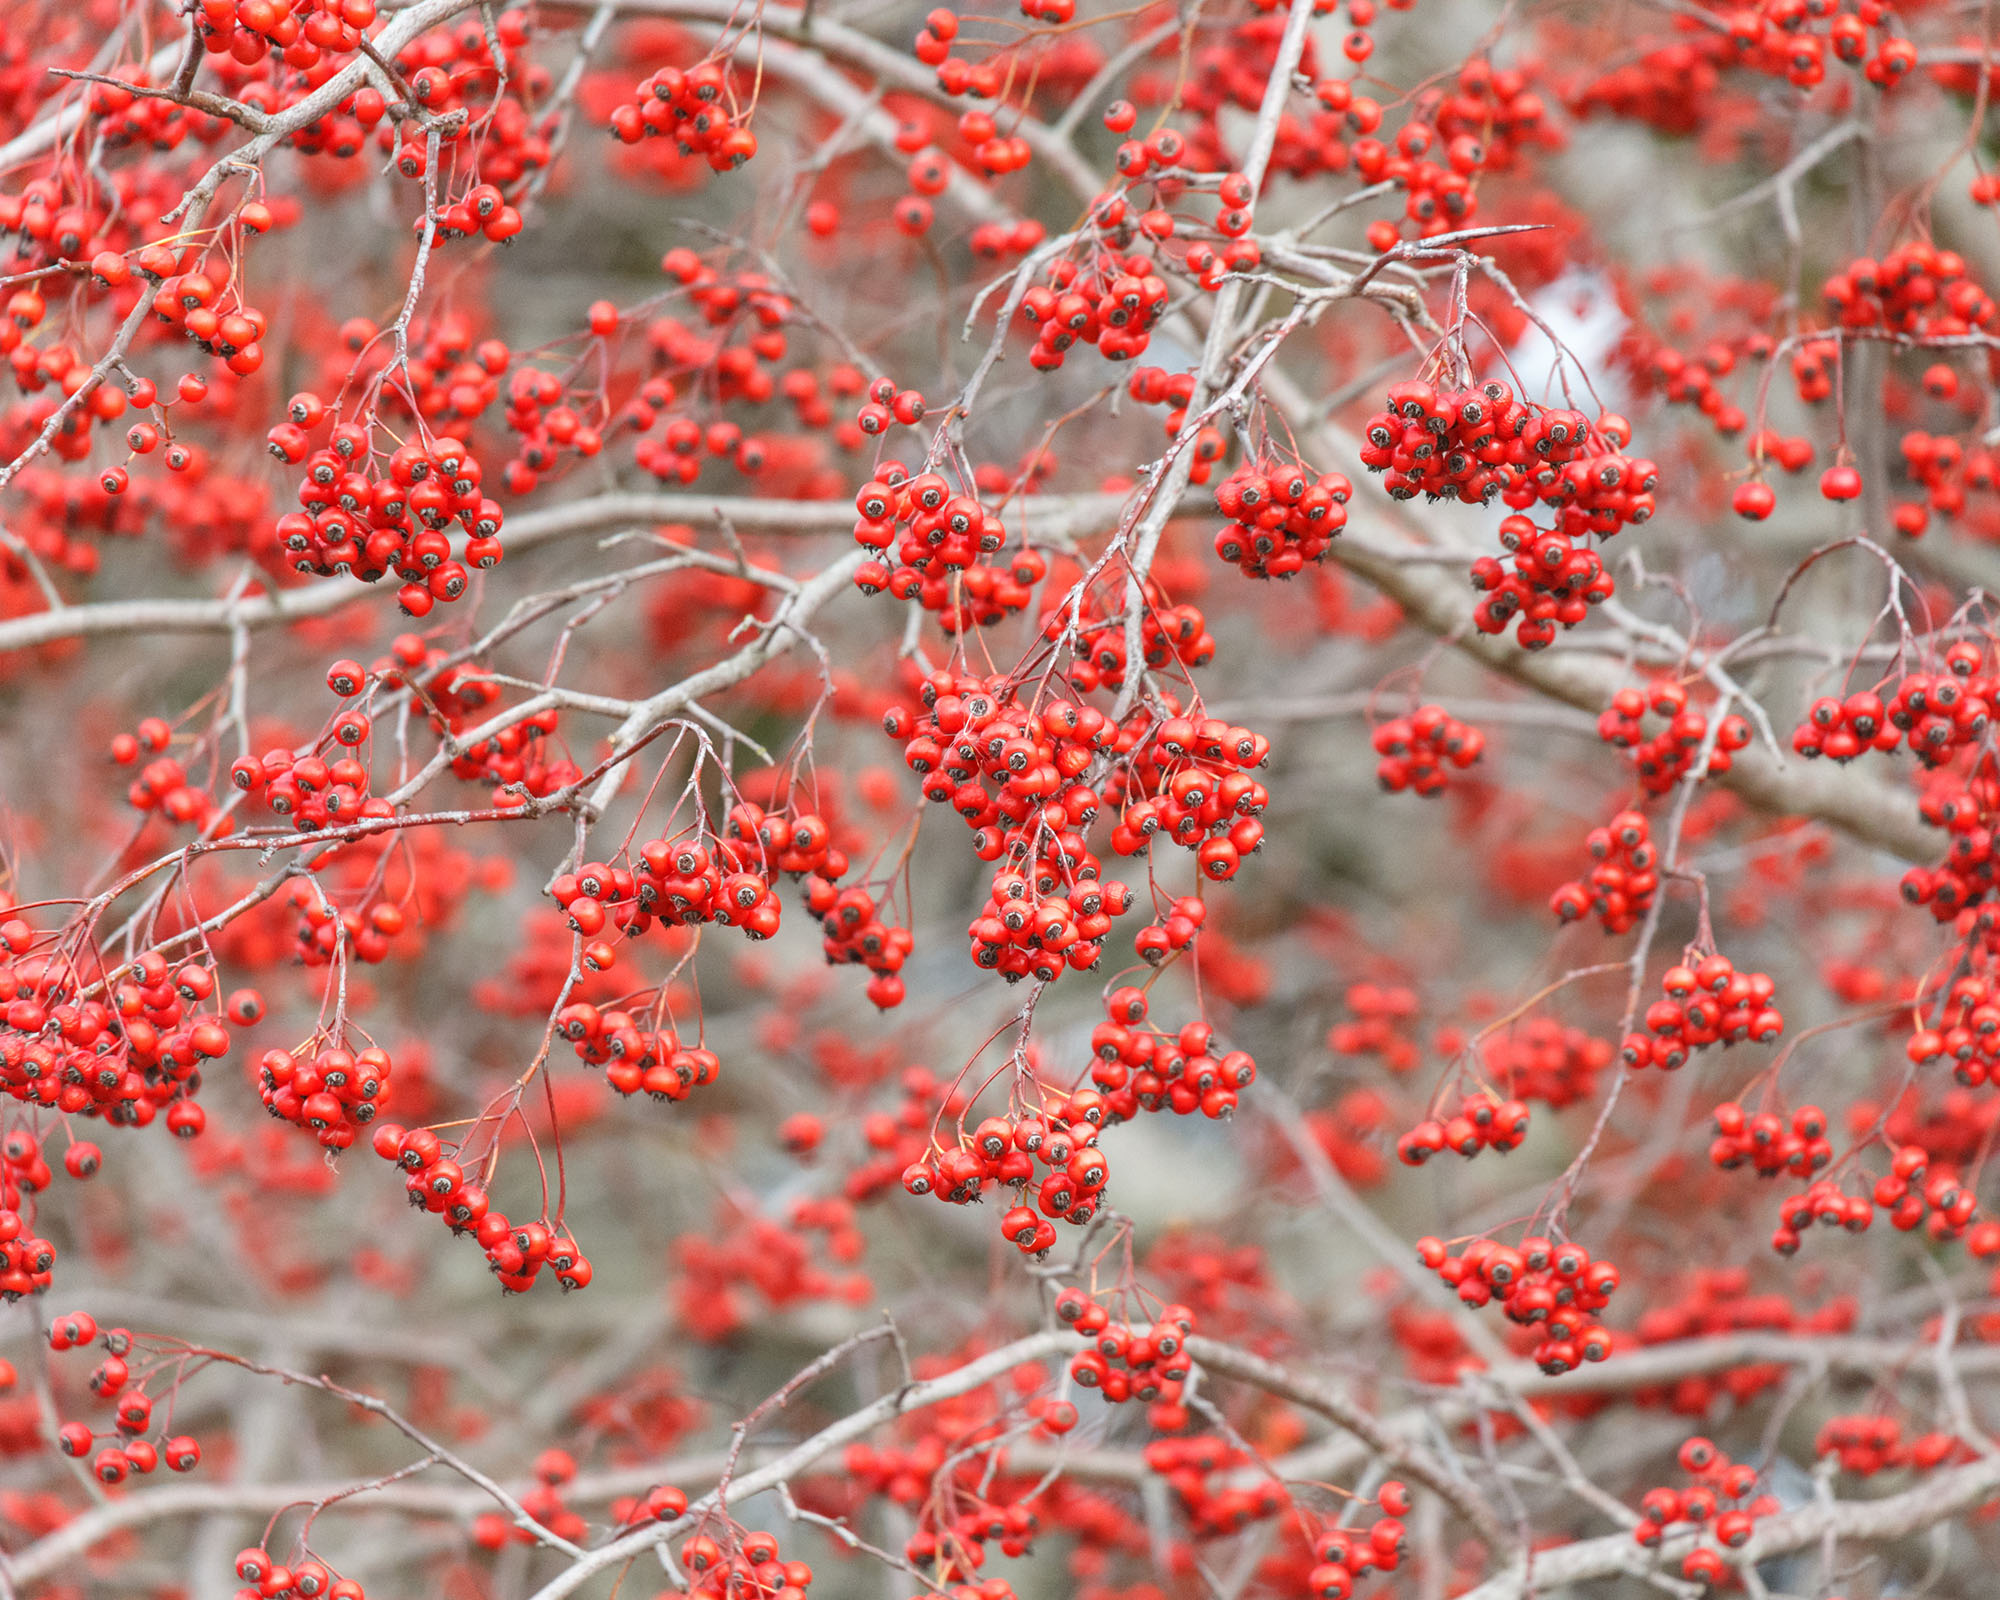 Red berries of Washington hawthorn tree Crataegus phaenopyrum